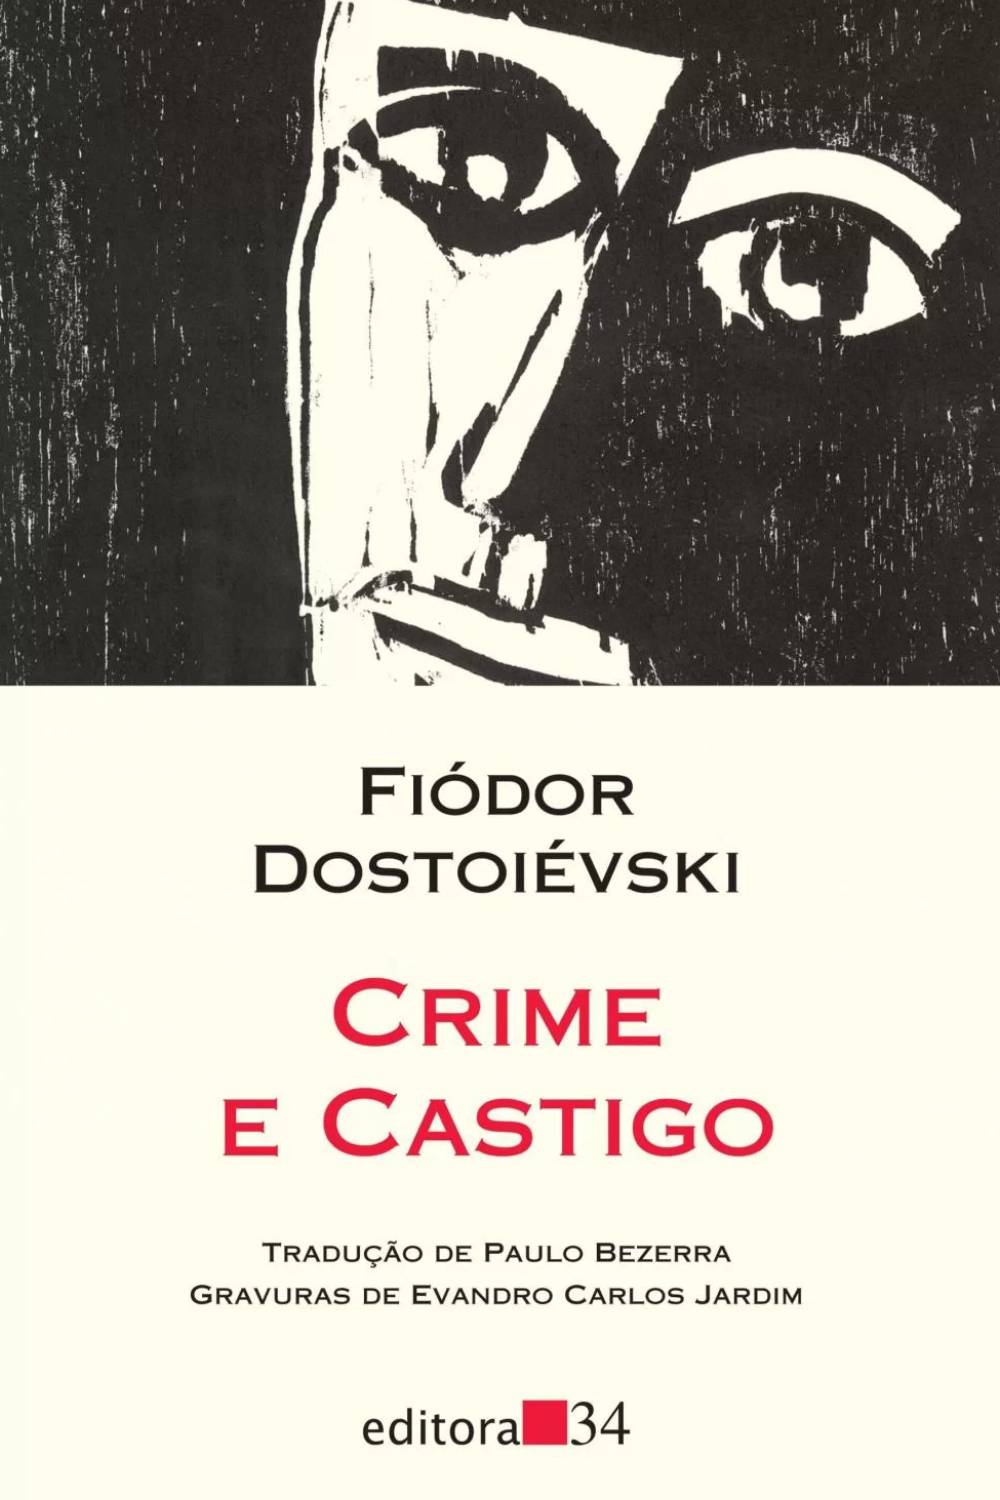 literatura russa traduzao paulo bezerra dostoievski crime castigo